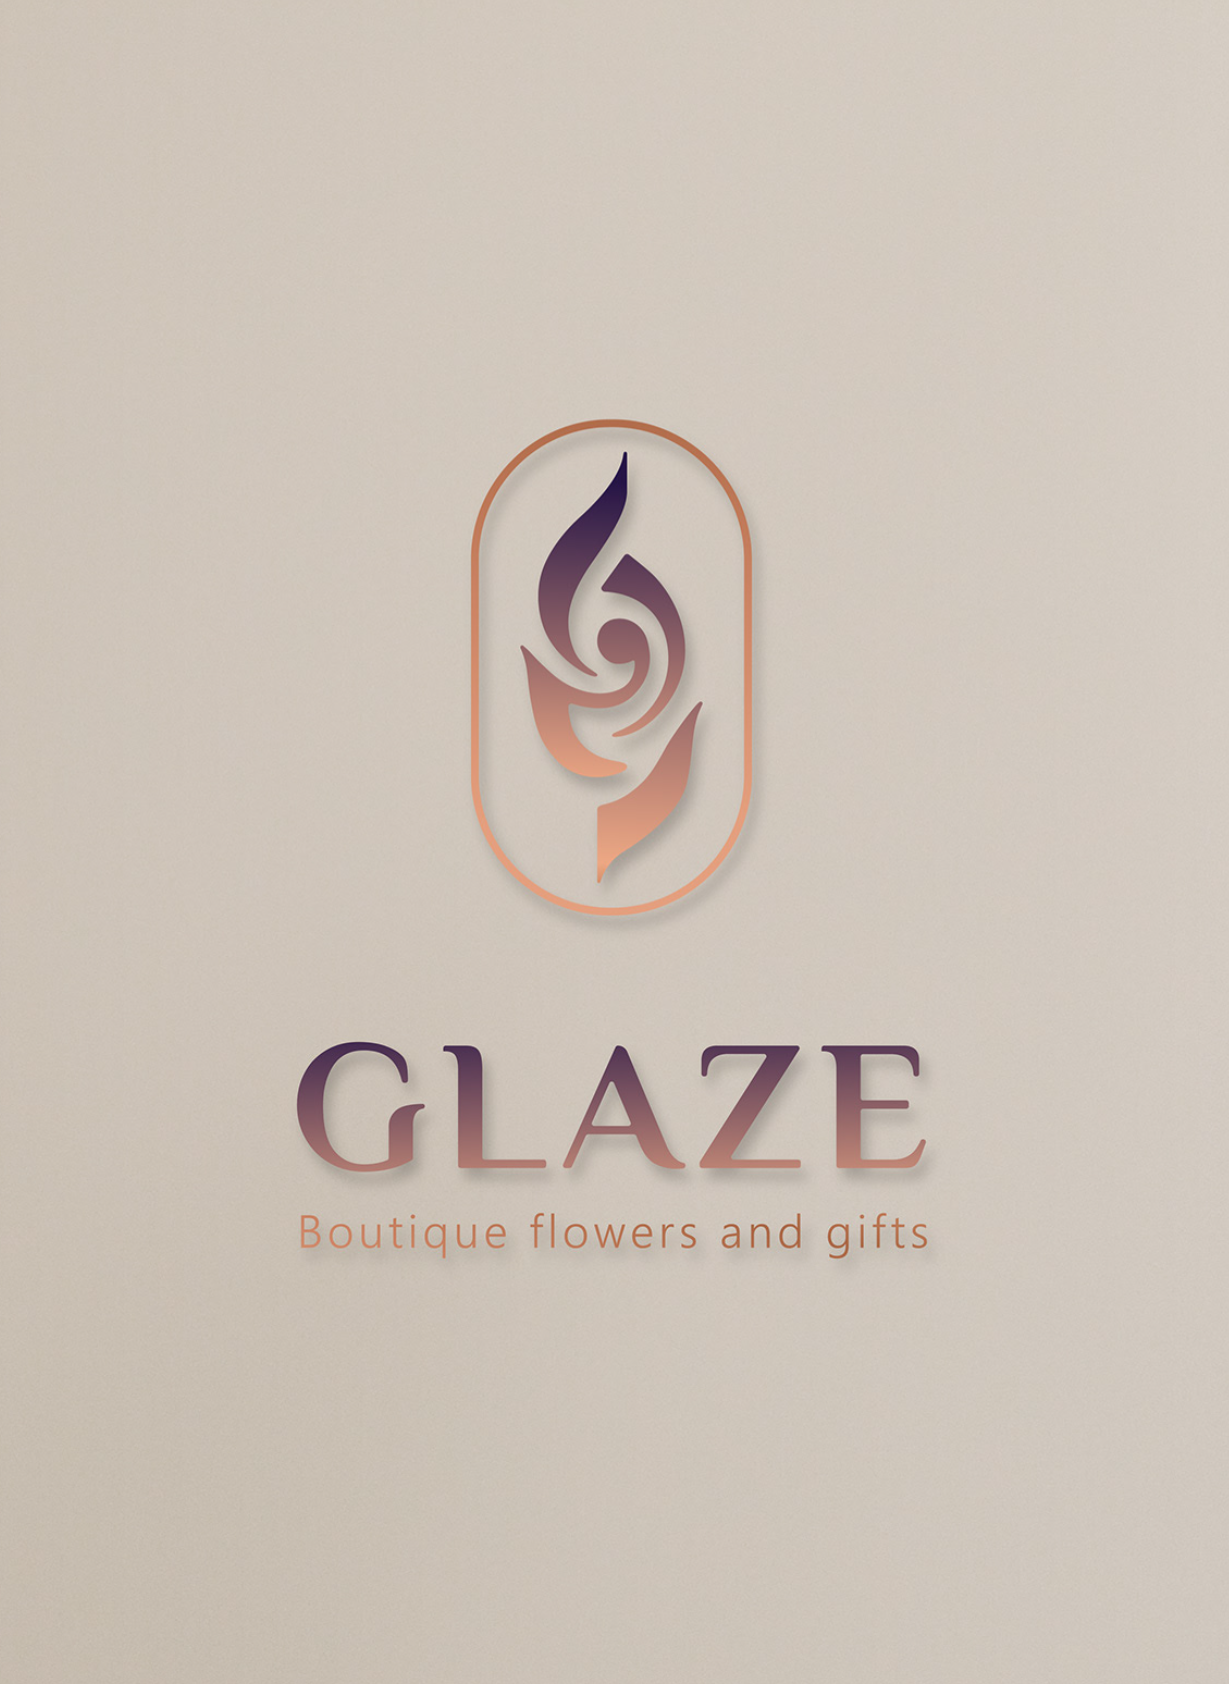 Glaze project screenshot of logo design